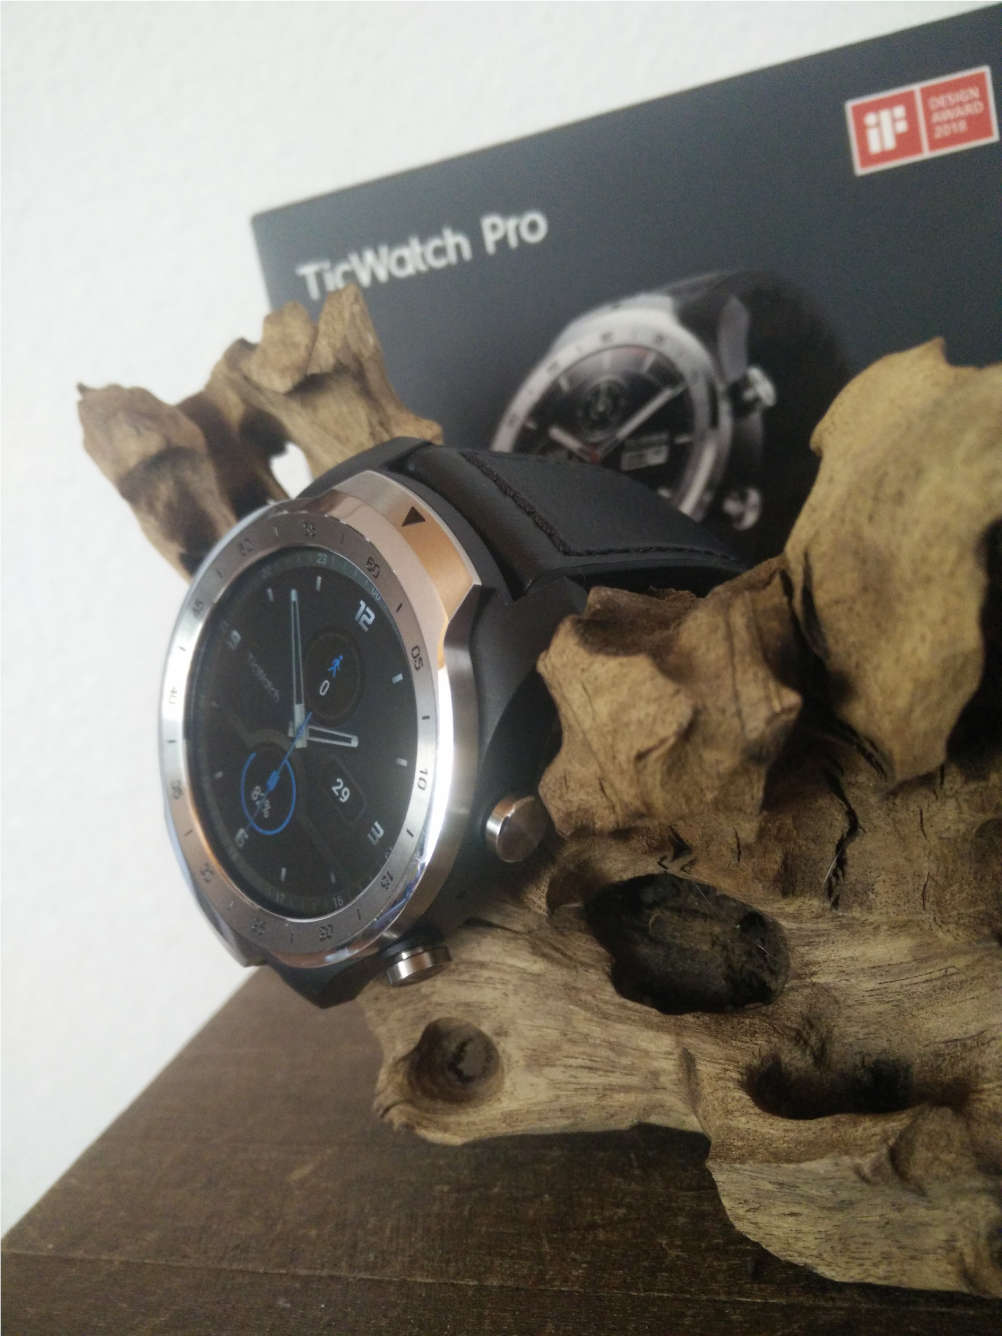 ticwatchpro mobvoi design